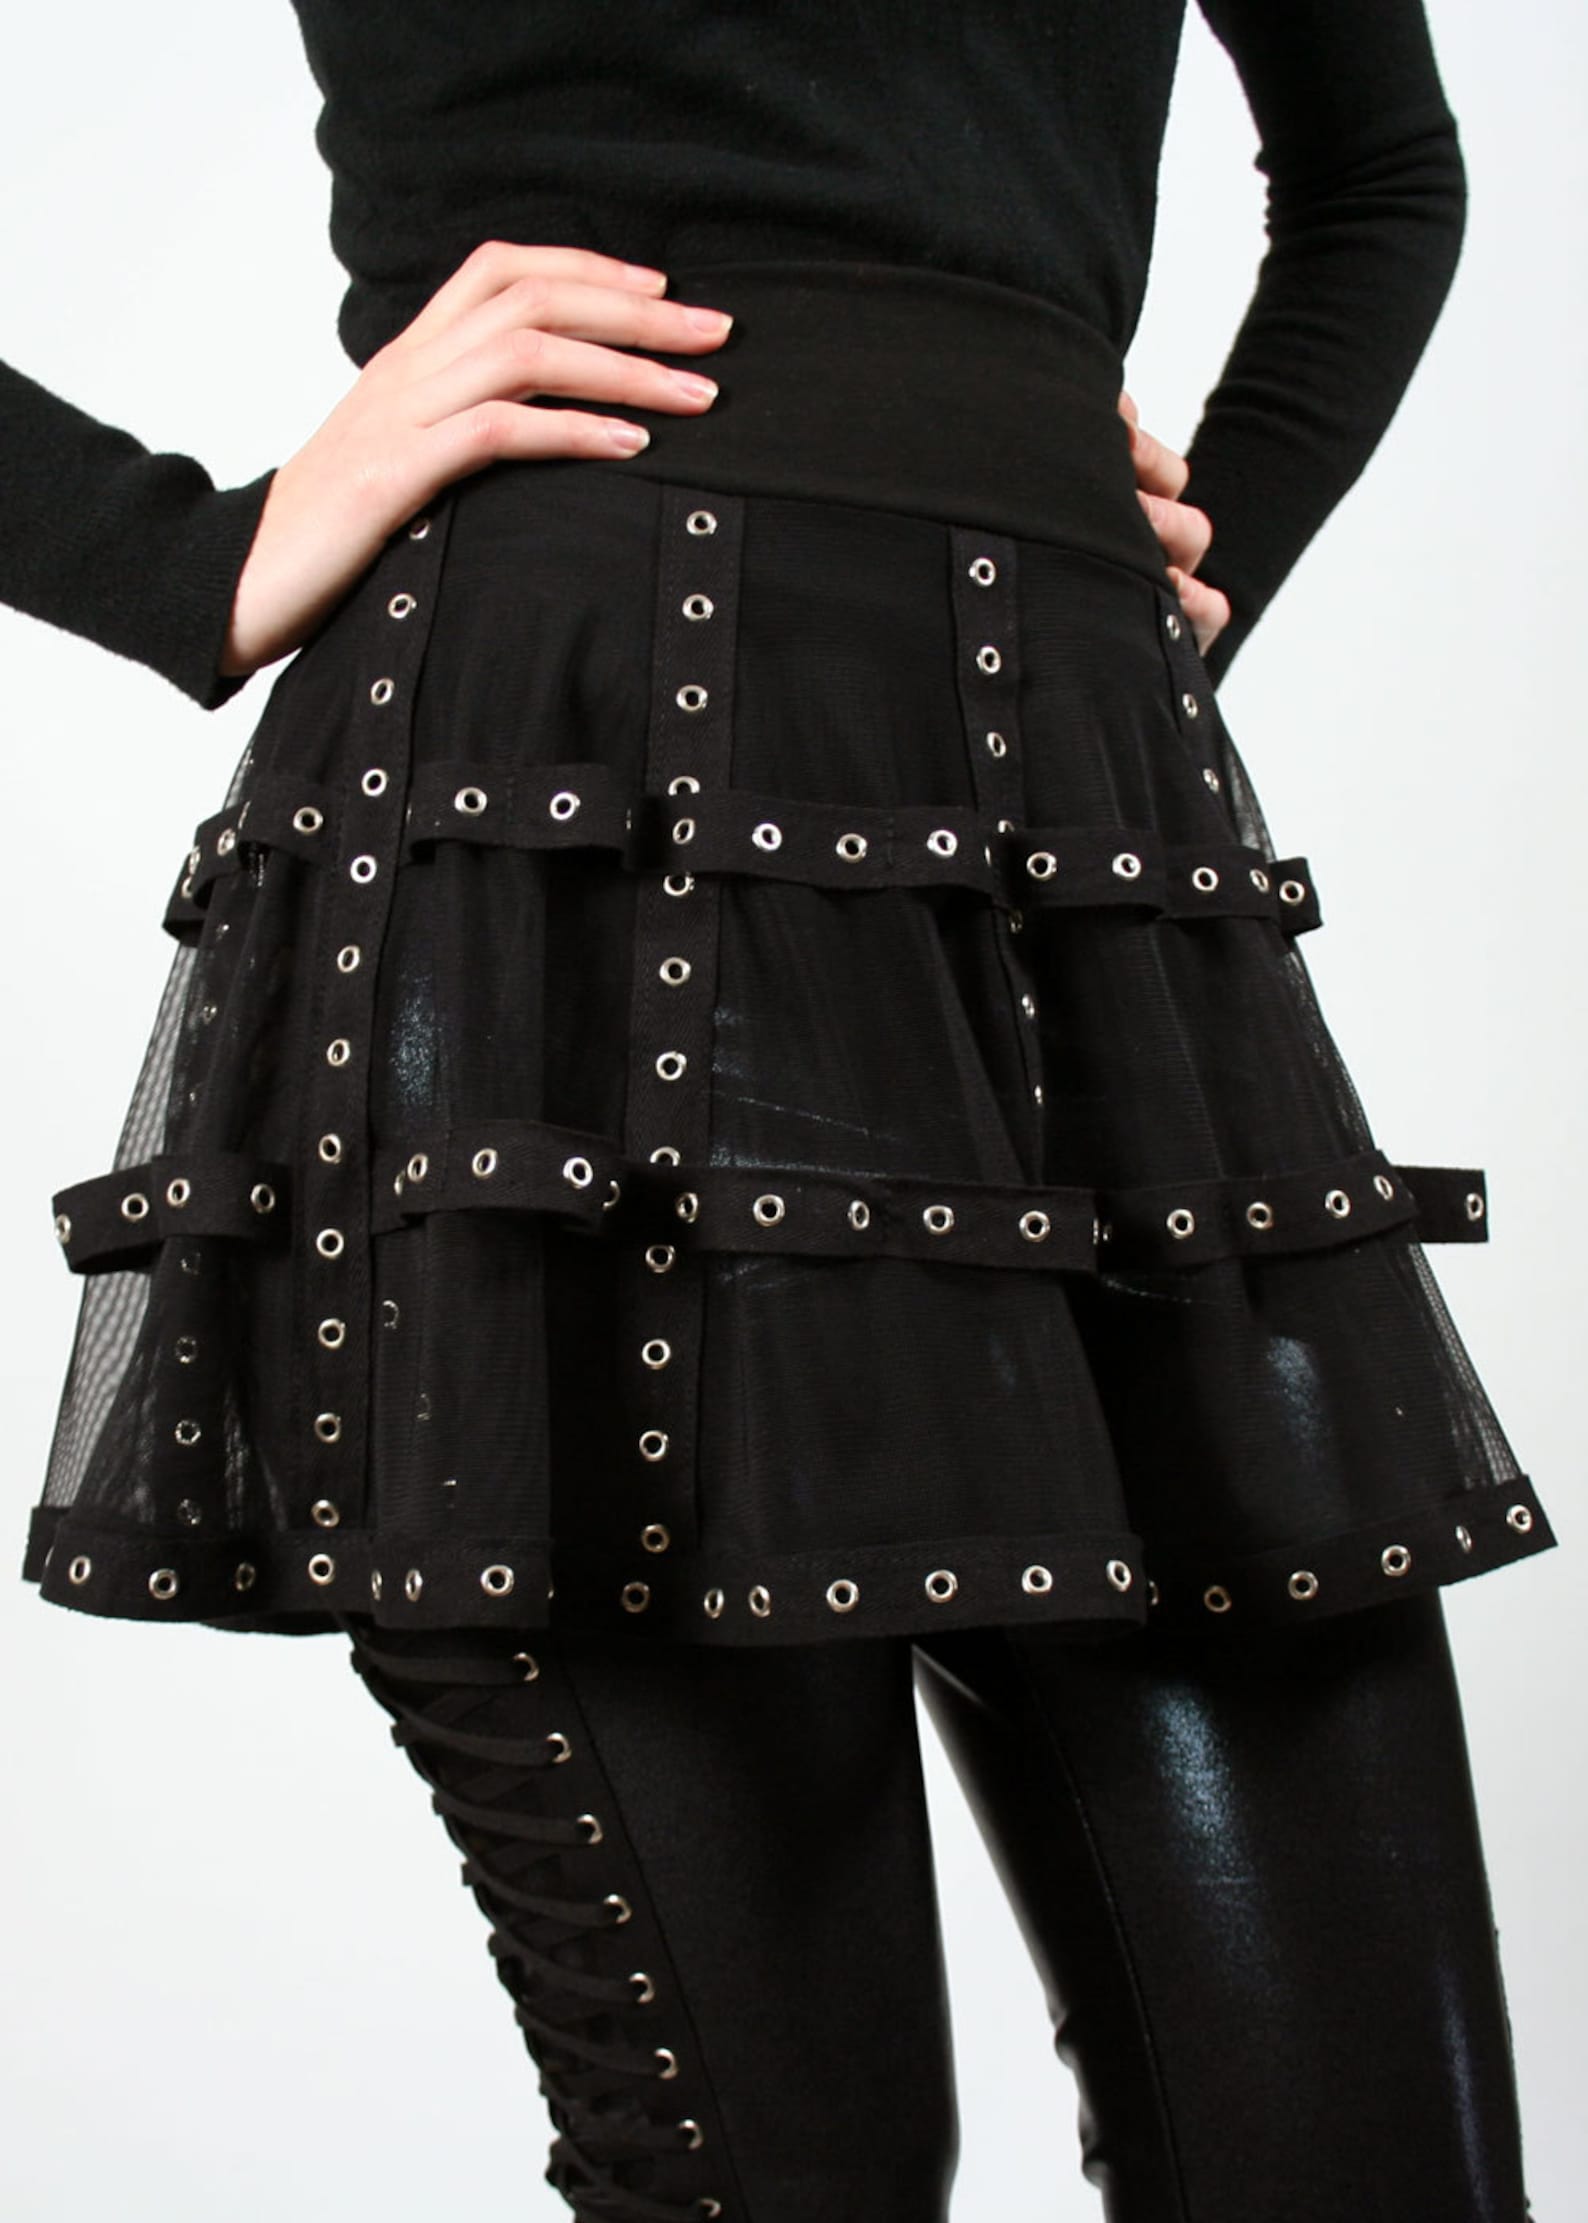 Black Mesh and Grommet Cage Skirt XS S M L XL 2XL 3xl Plus - Etsy